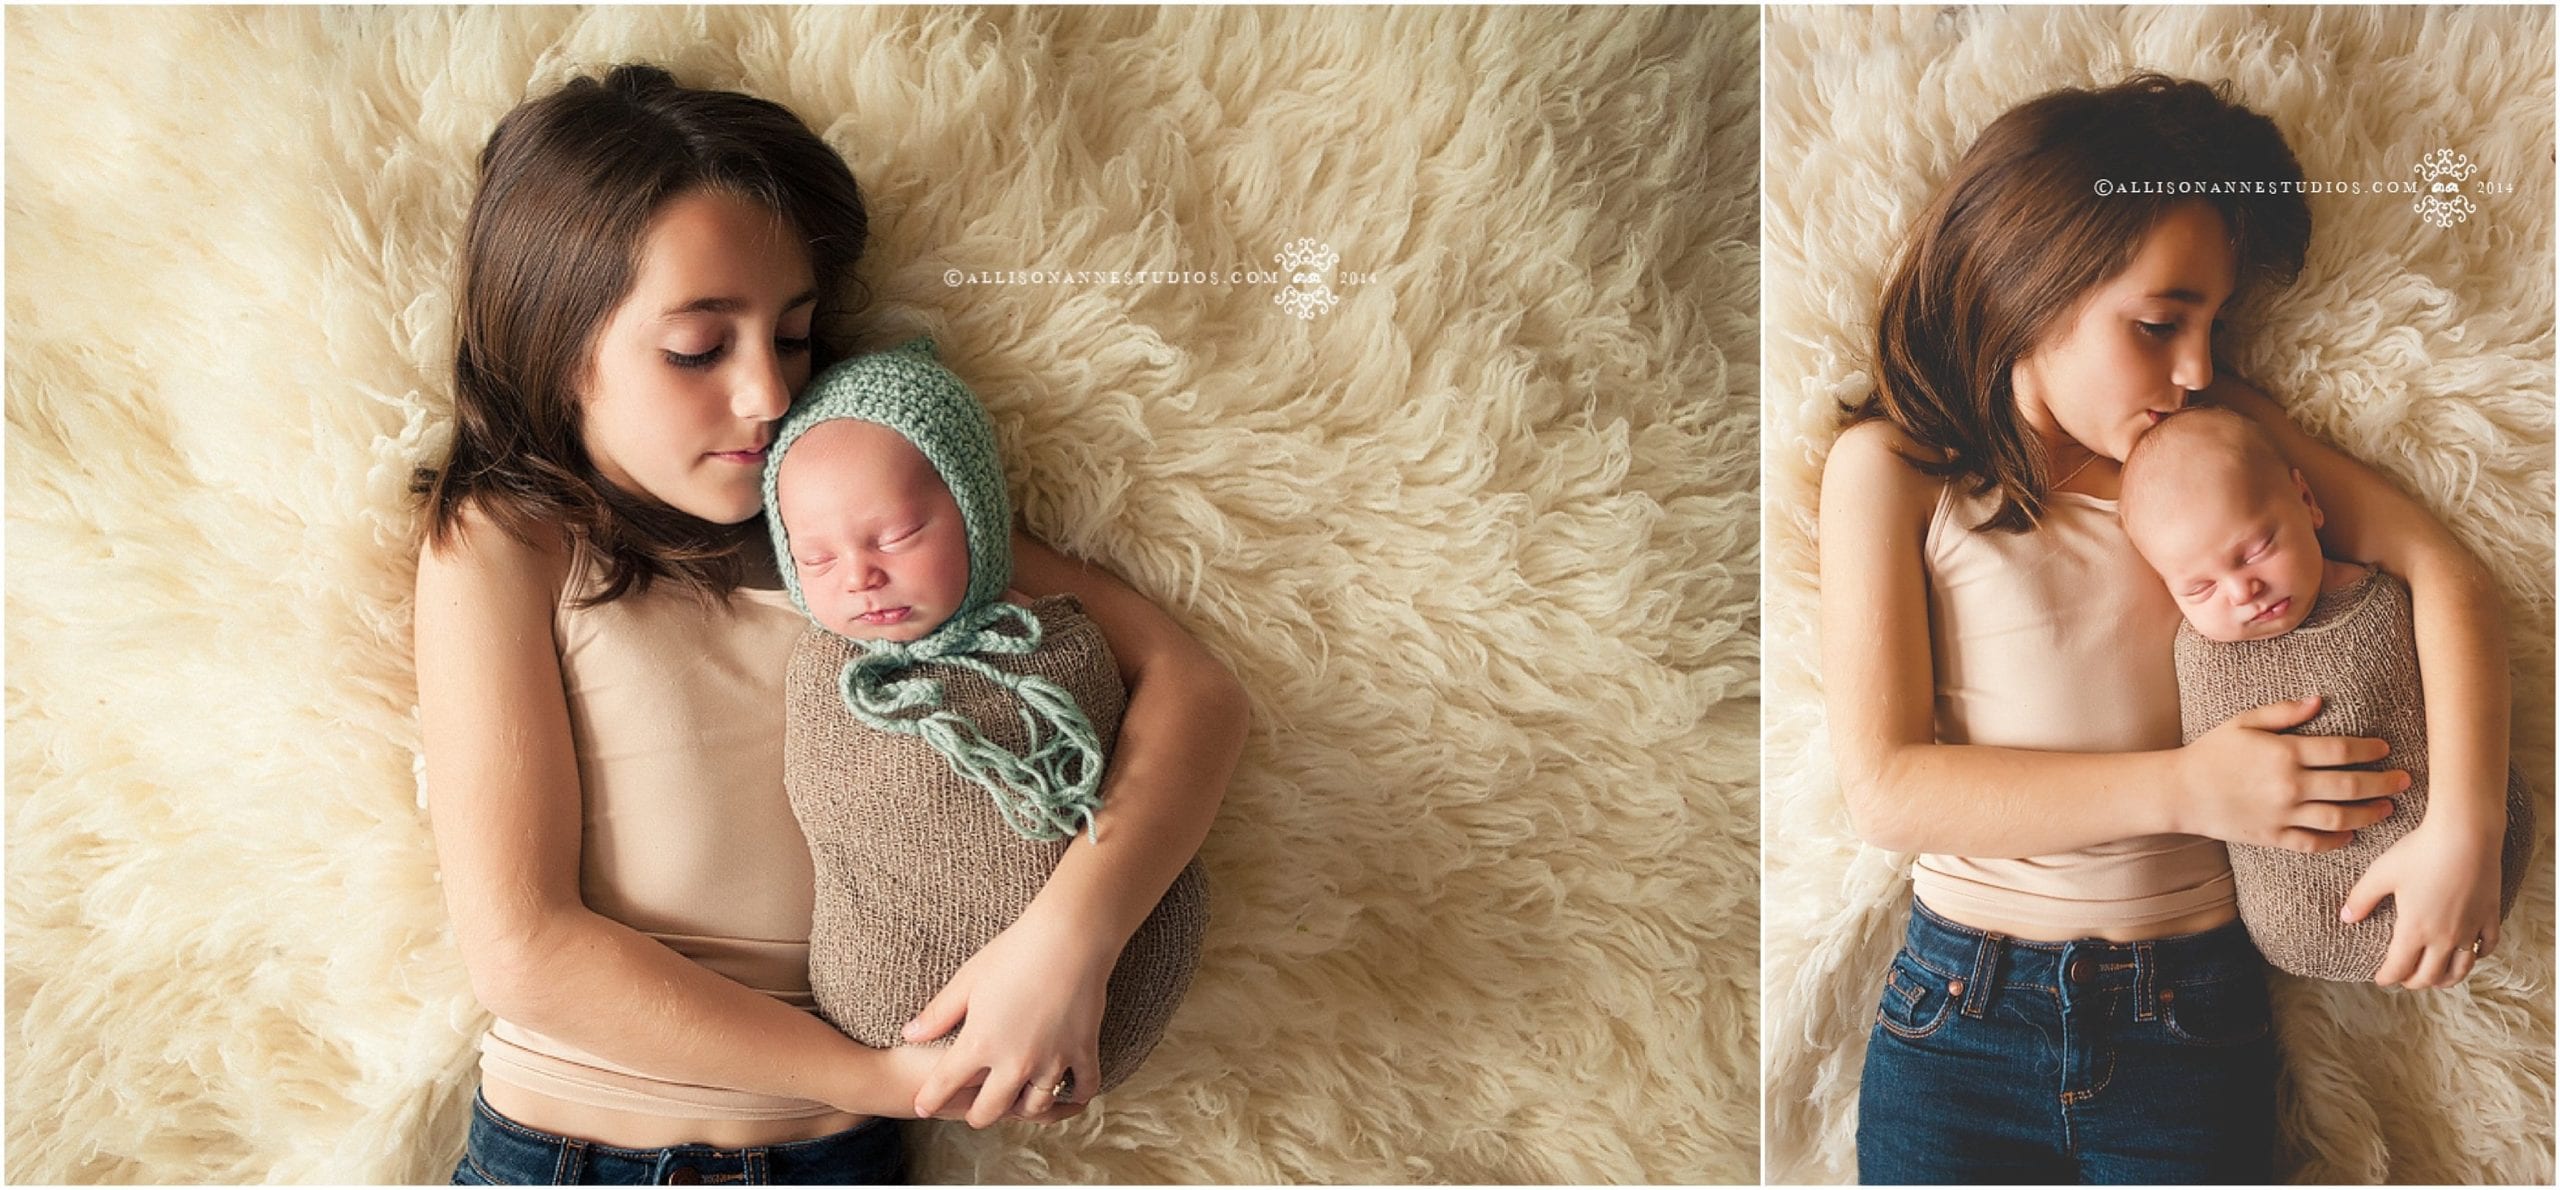 Max Baby, Newborn, AllisonAnne Studios, LucidFoto, LucidPhoto, Hammonton Photographer, South Jersey Photography, Maternity, Mother,Hospital, Pregnancy